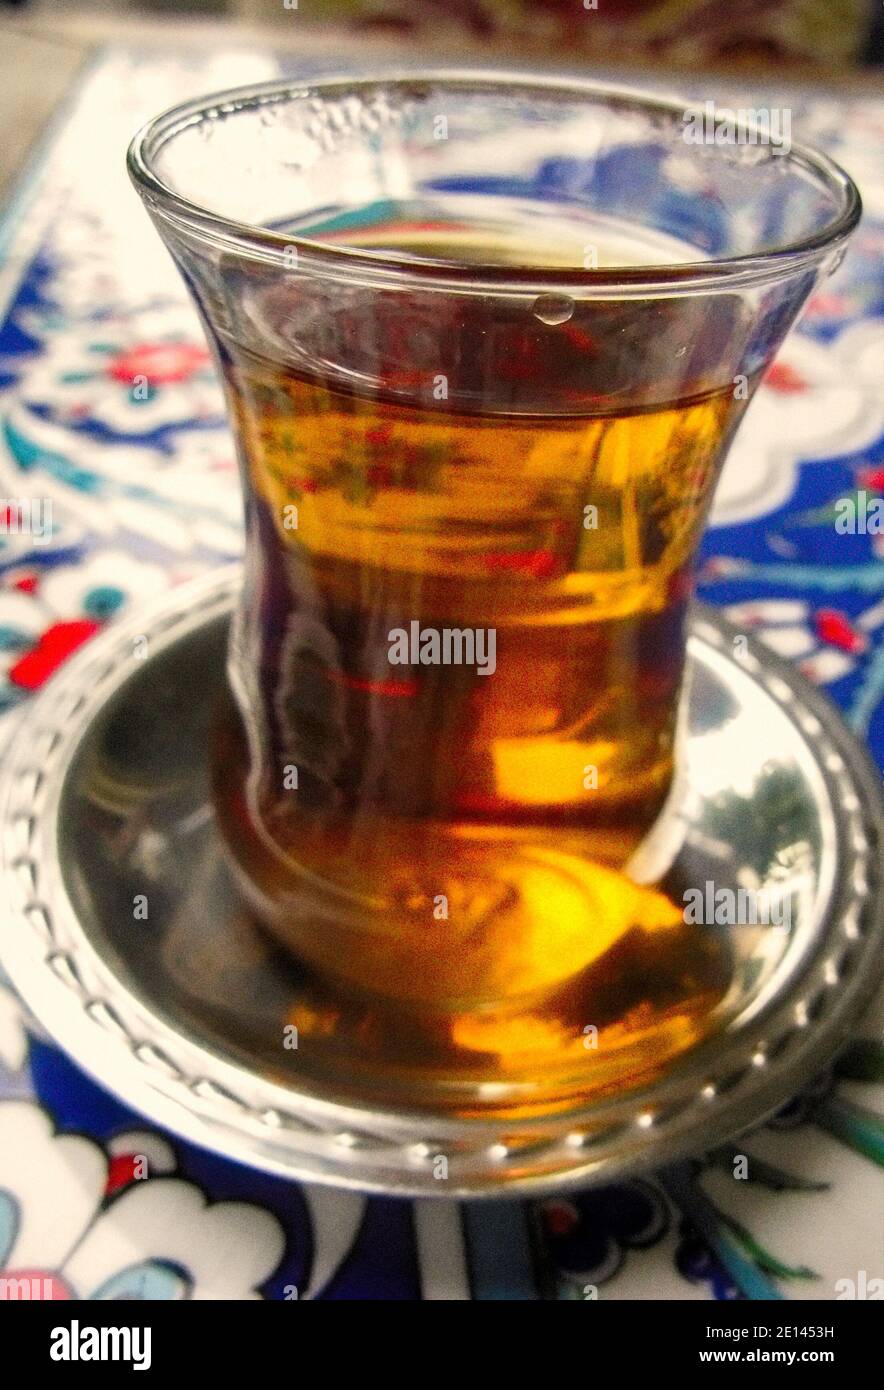 A glass of Turkish Tea, Sultanhamet district, Istanbul, Turkey Stock Photo